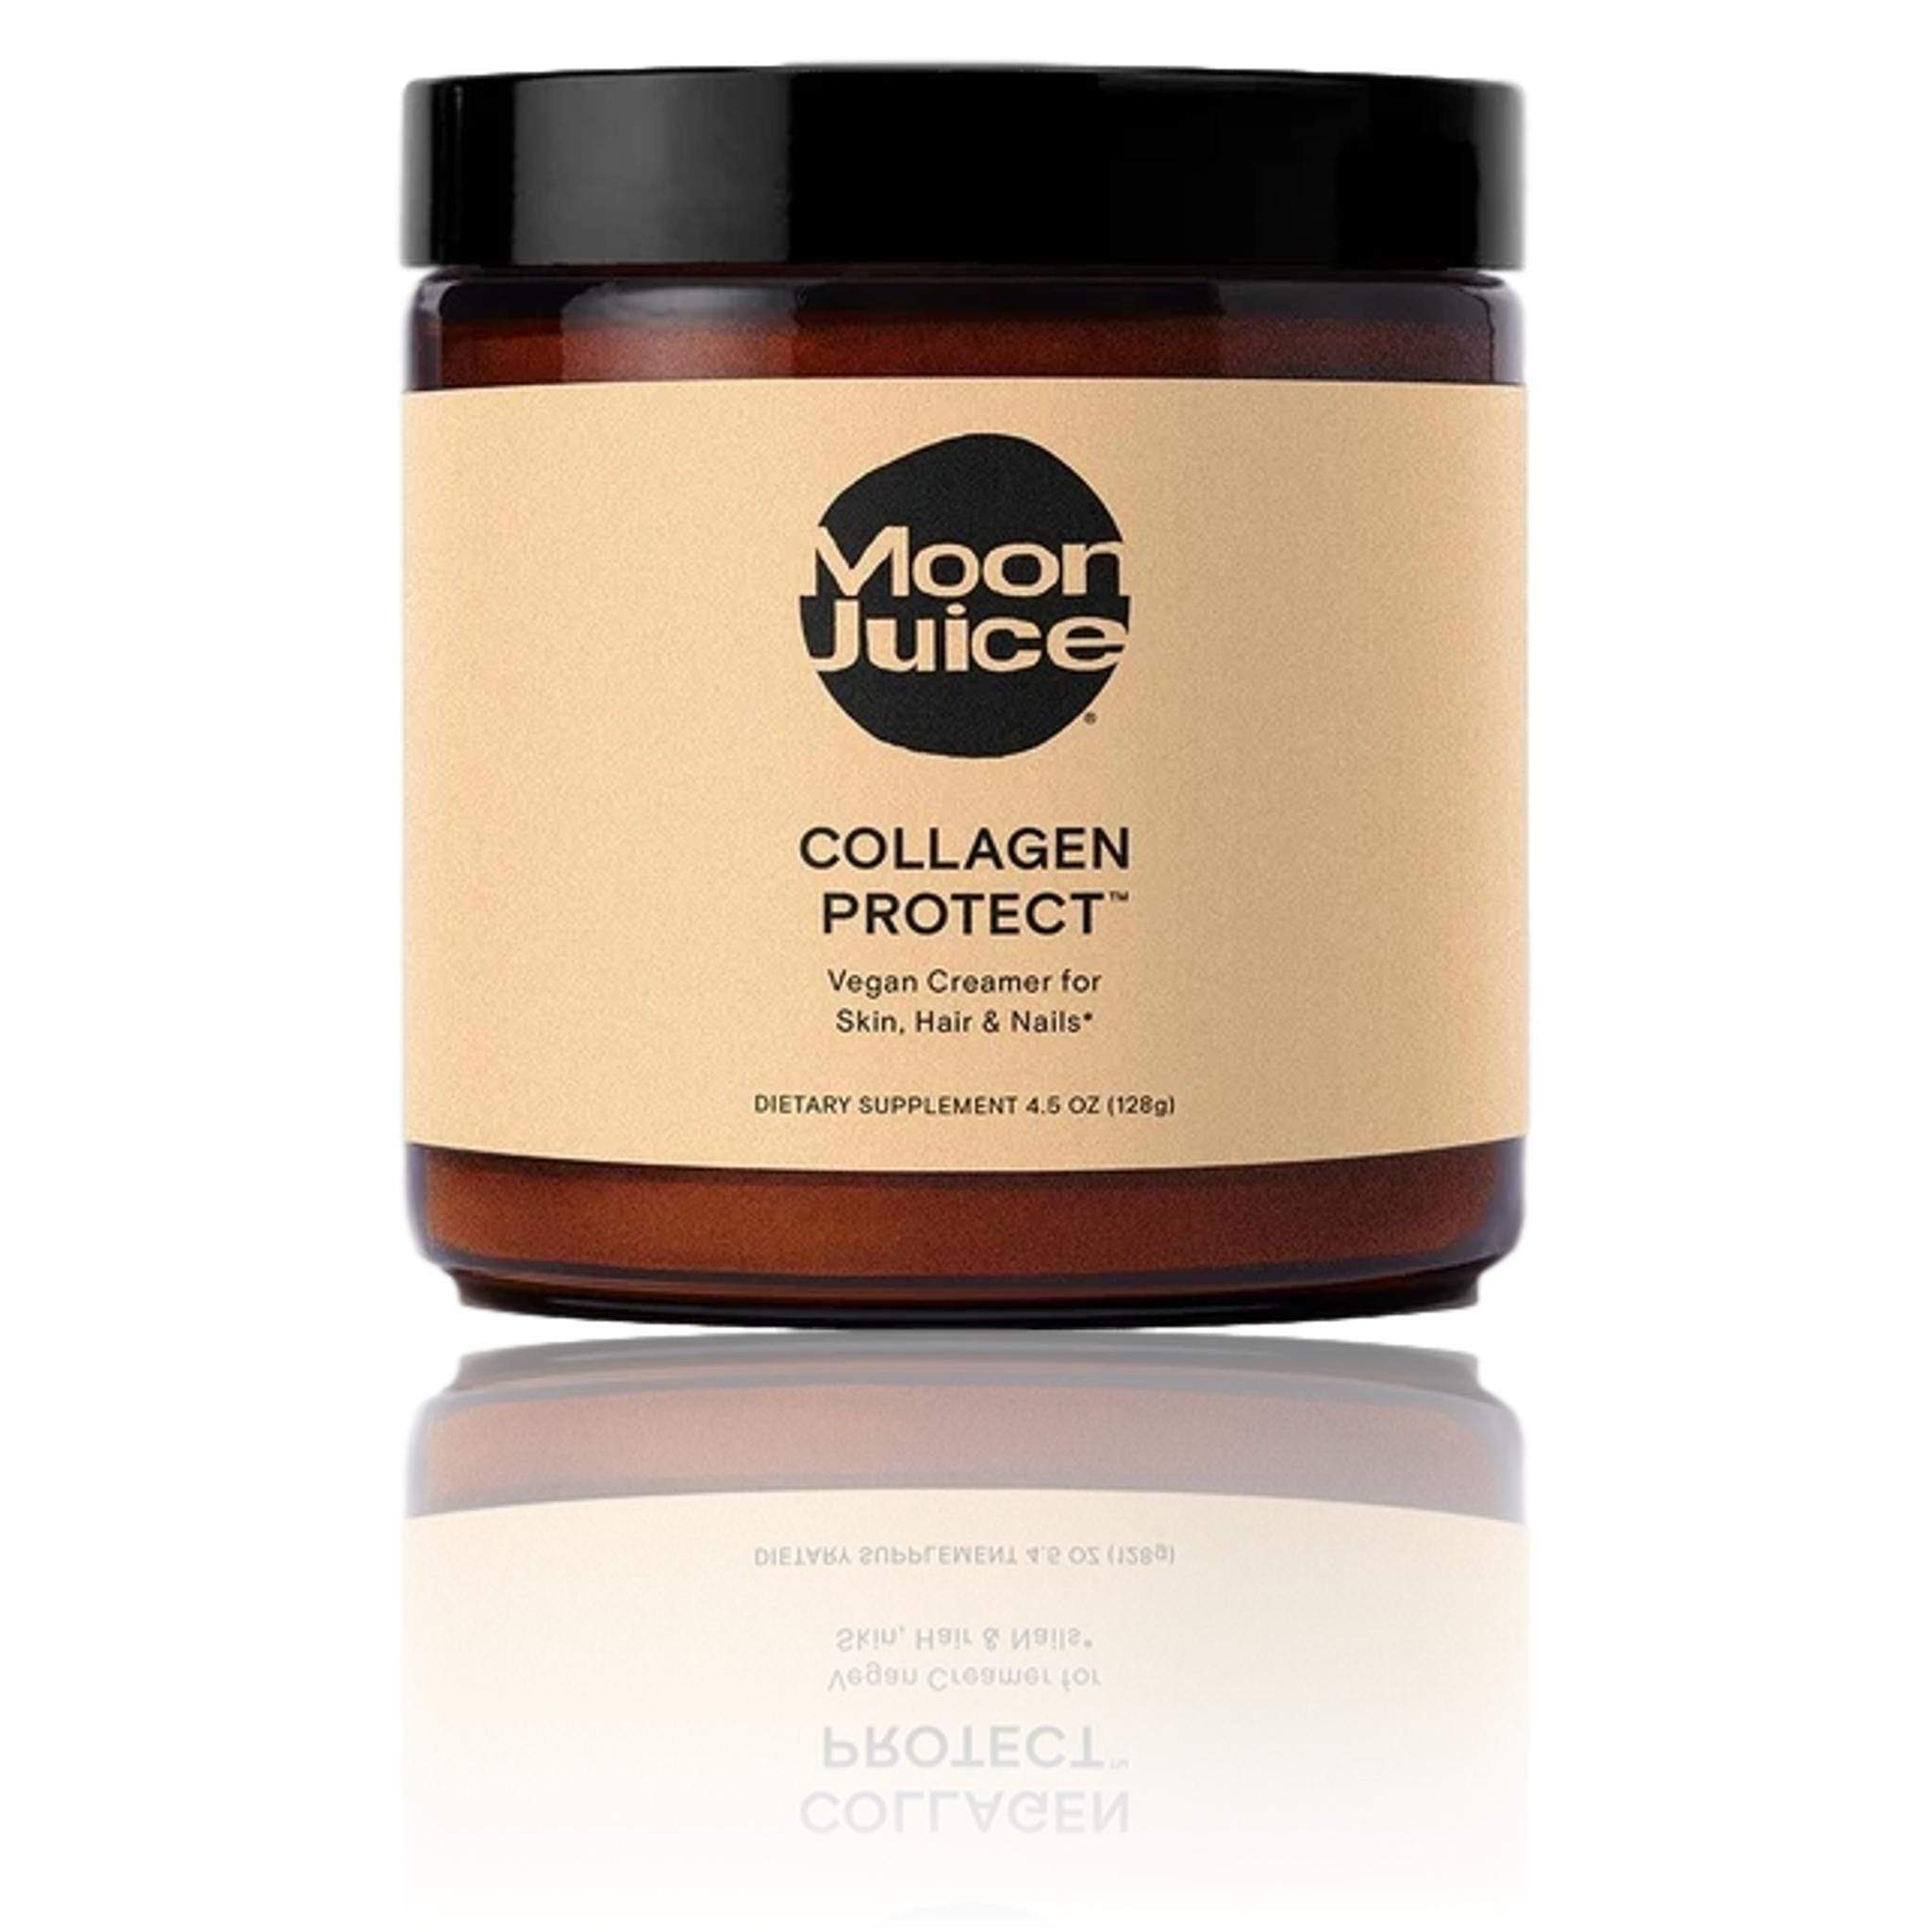 MOON JUICE Collagen Protect™ Vegan Creamer for Hair, Skin & Nails, 4.5oz | 128g, Supplements, London Loves Beauty